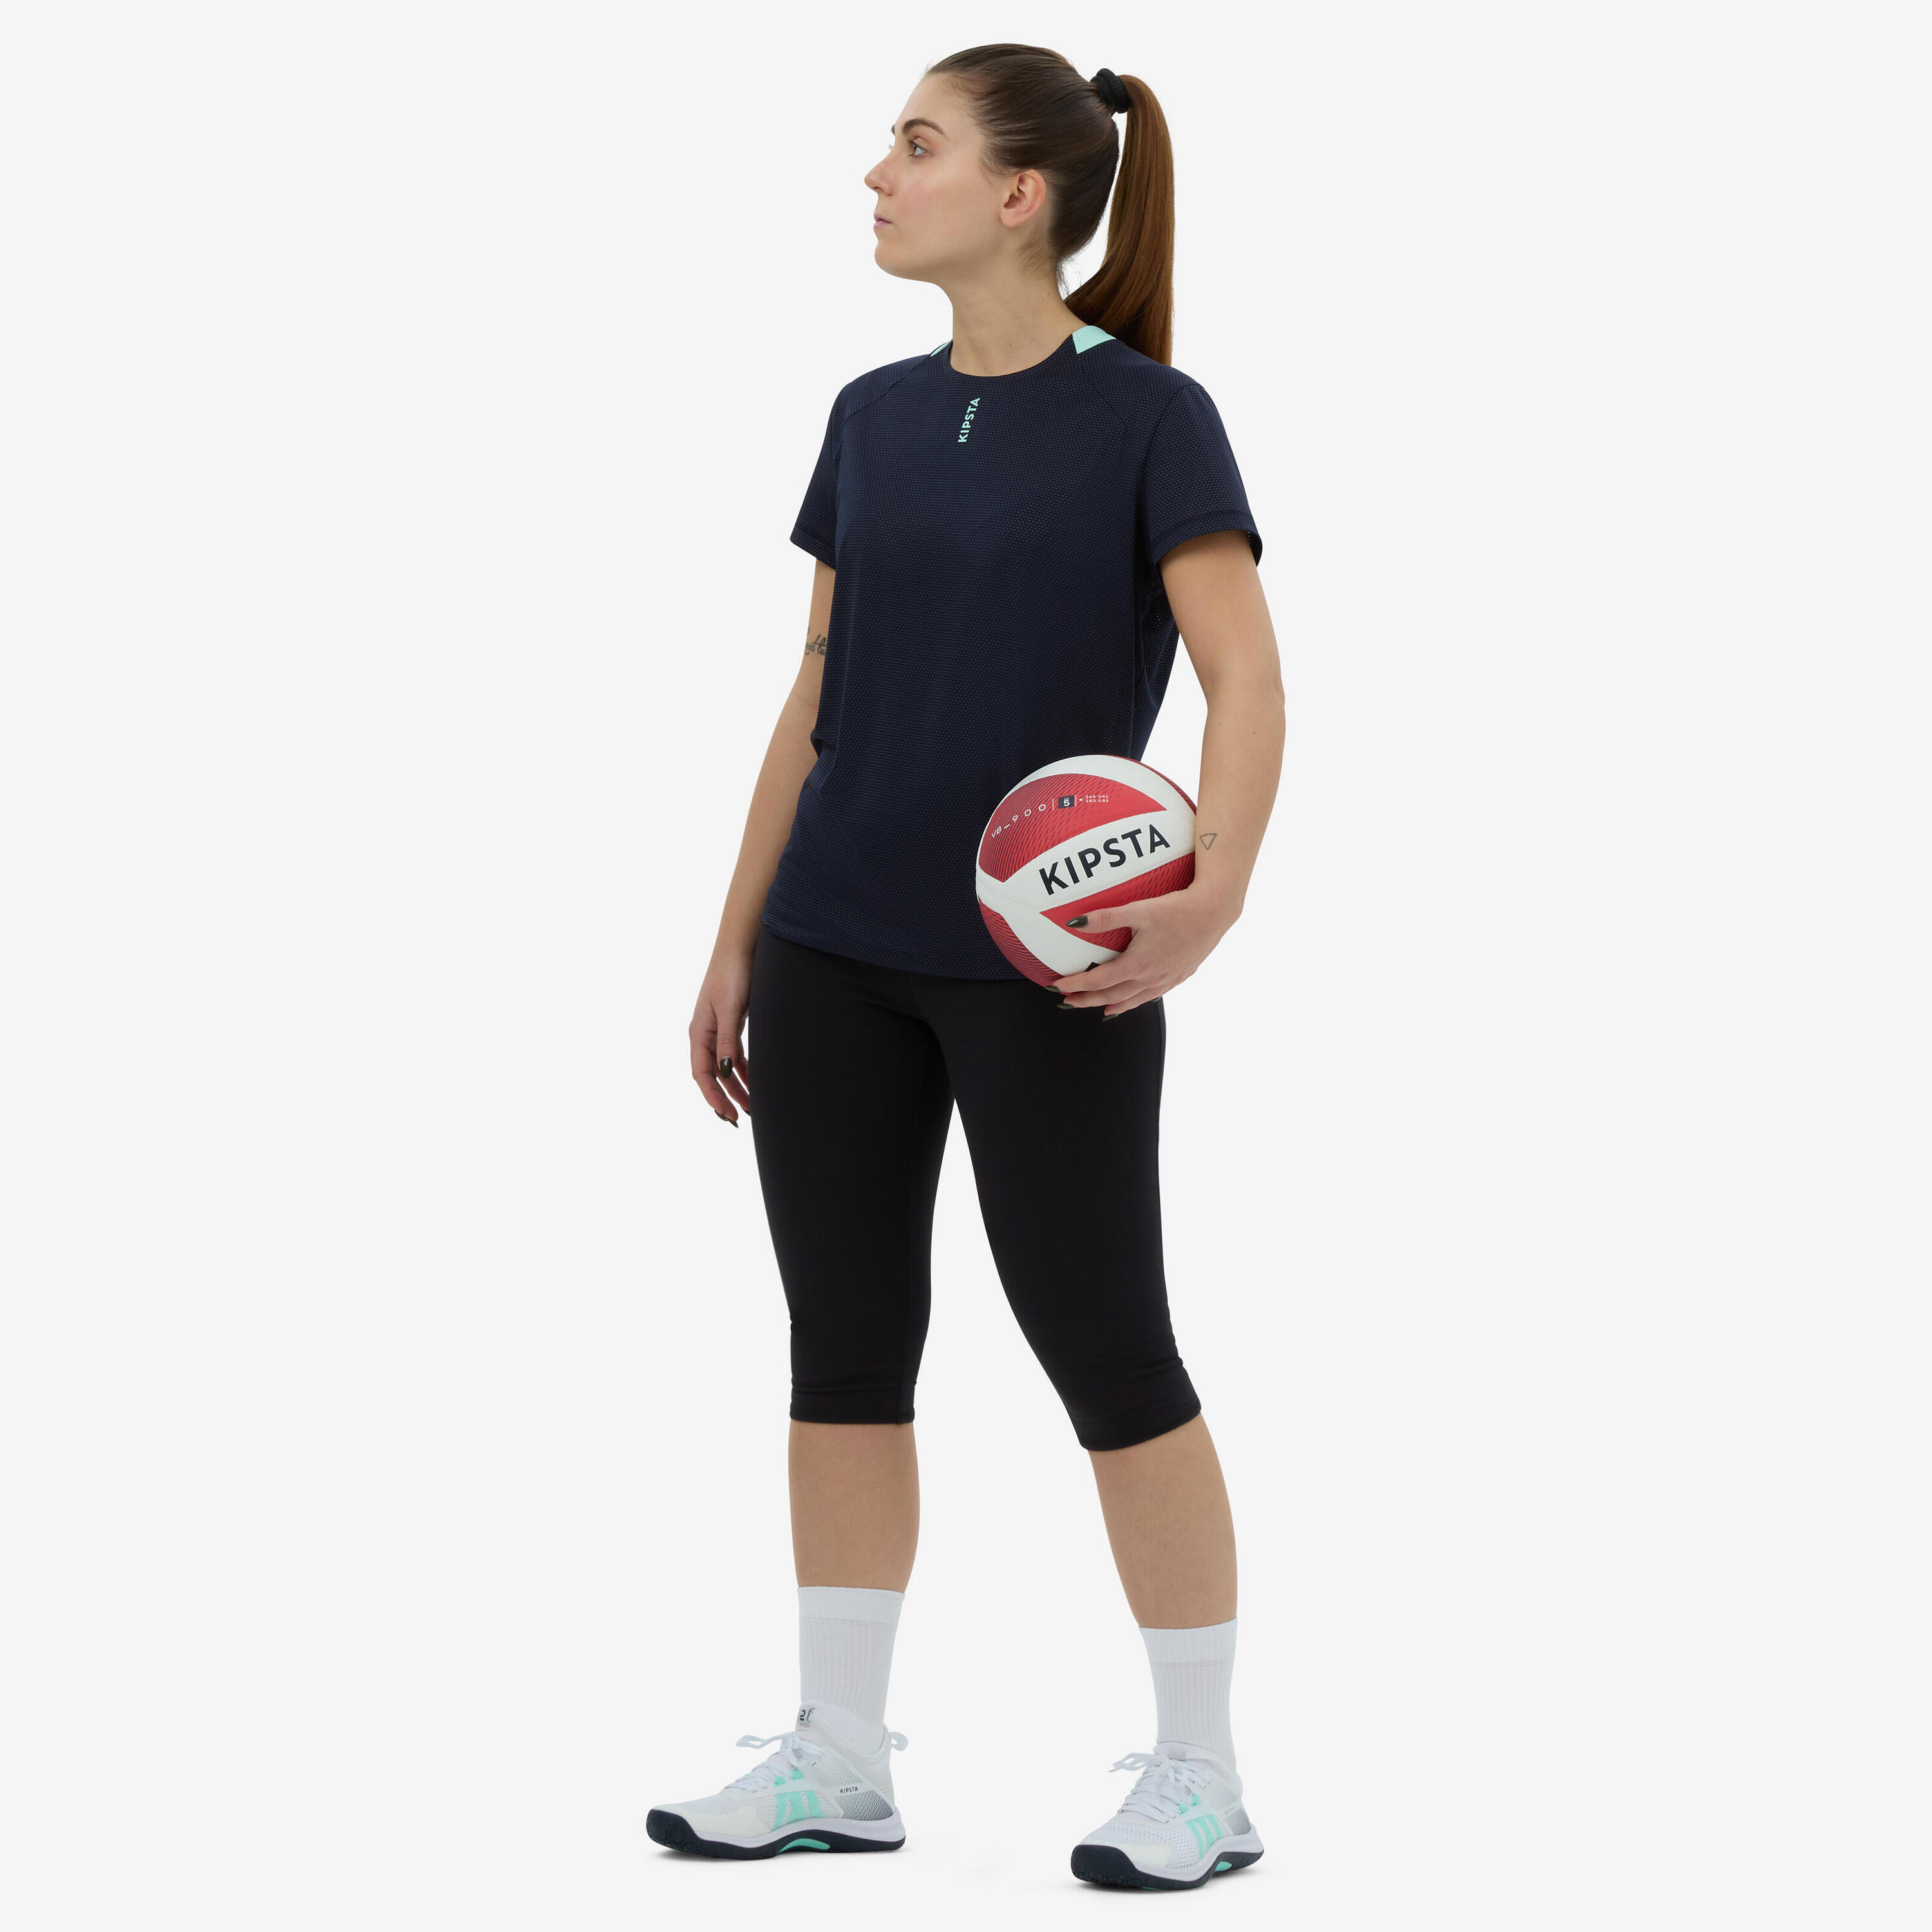 Women's Cotton Volleyball Leggings - Black 2/4